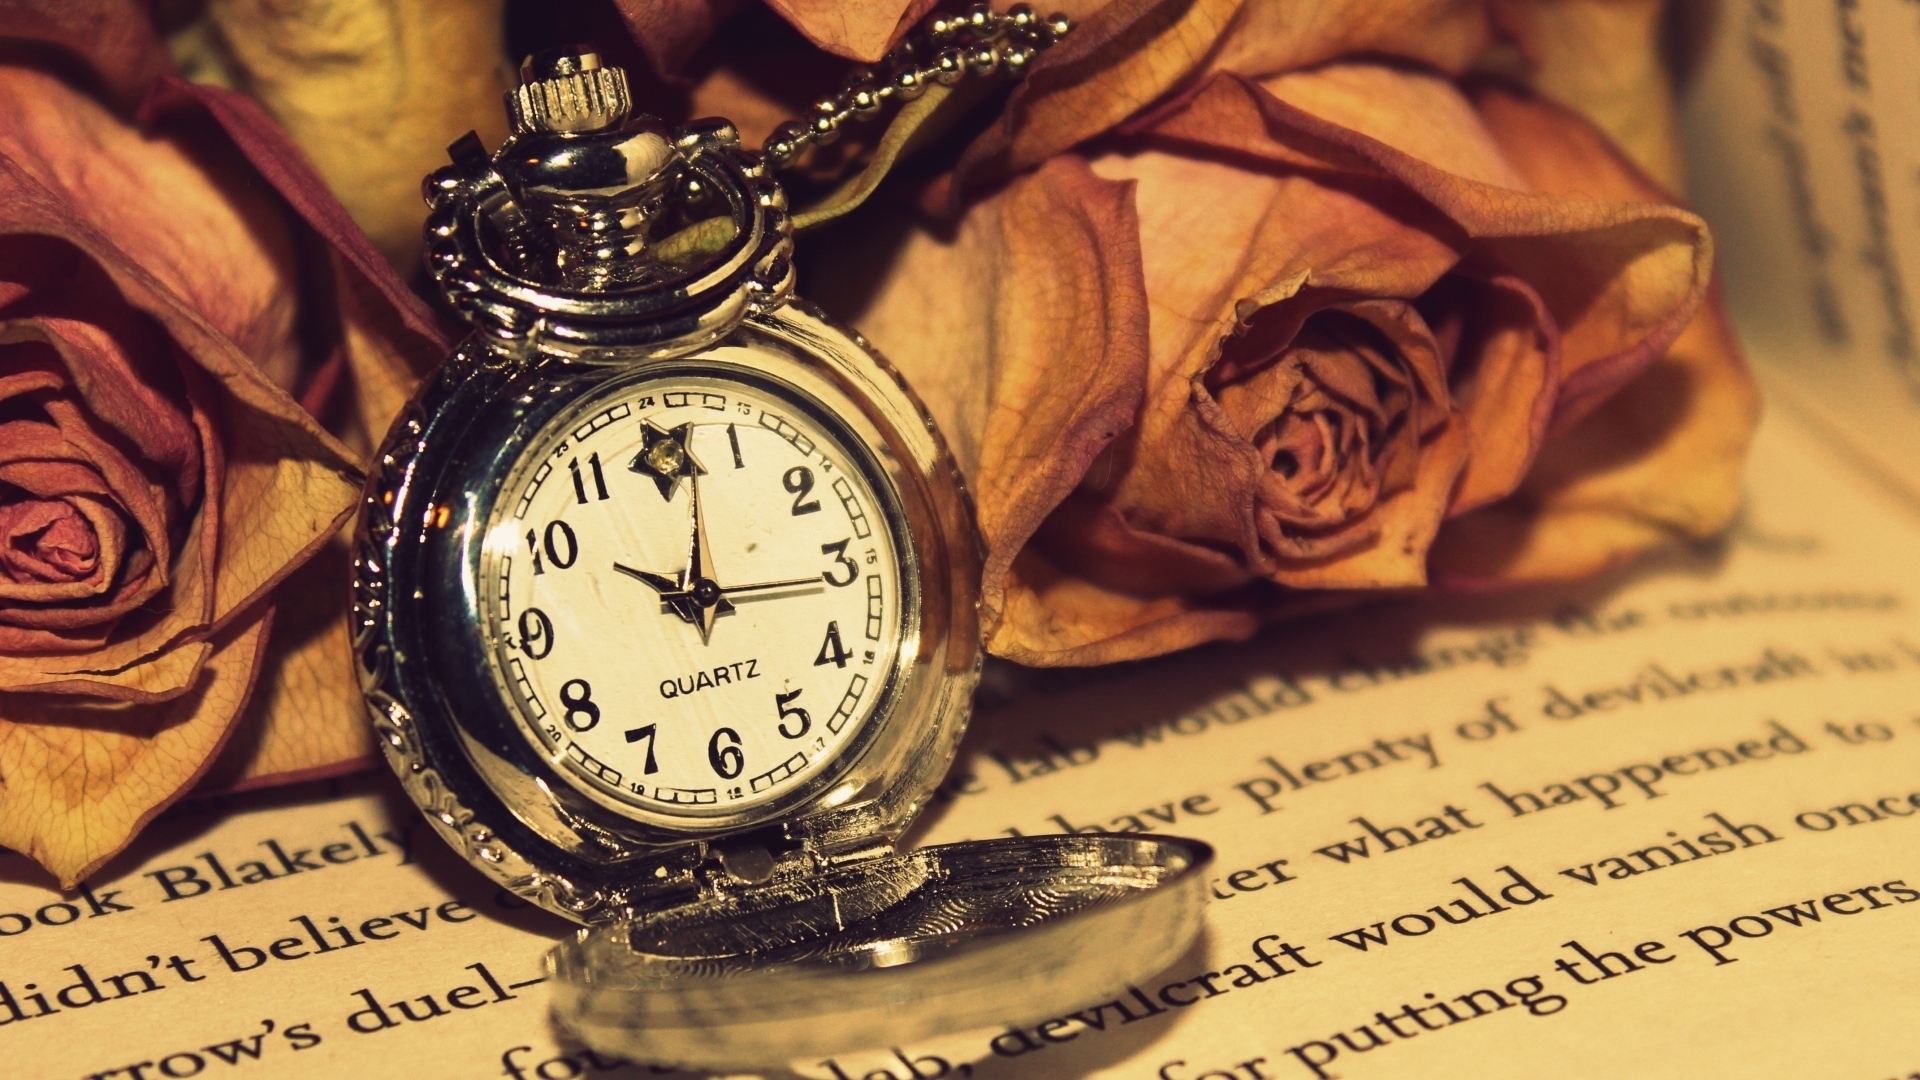 man made, watch, antique, flower, pocket watch, rose